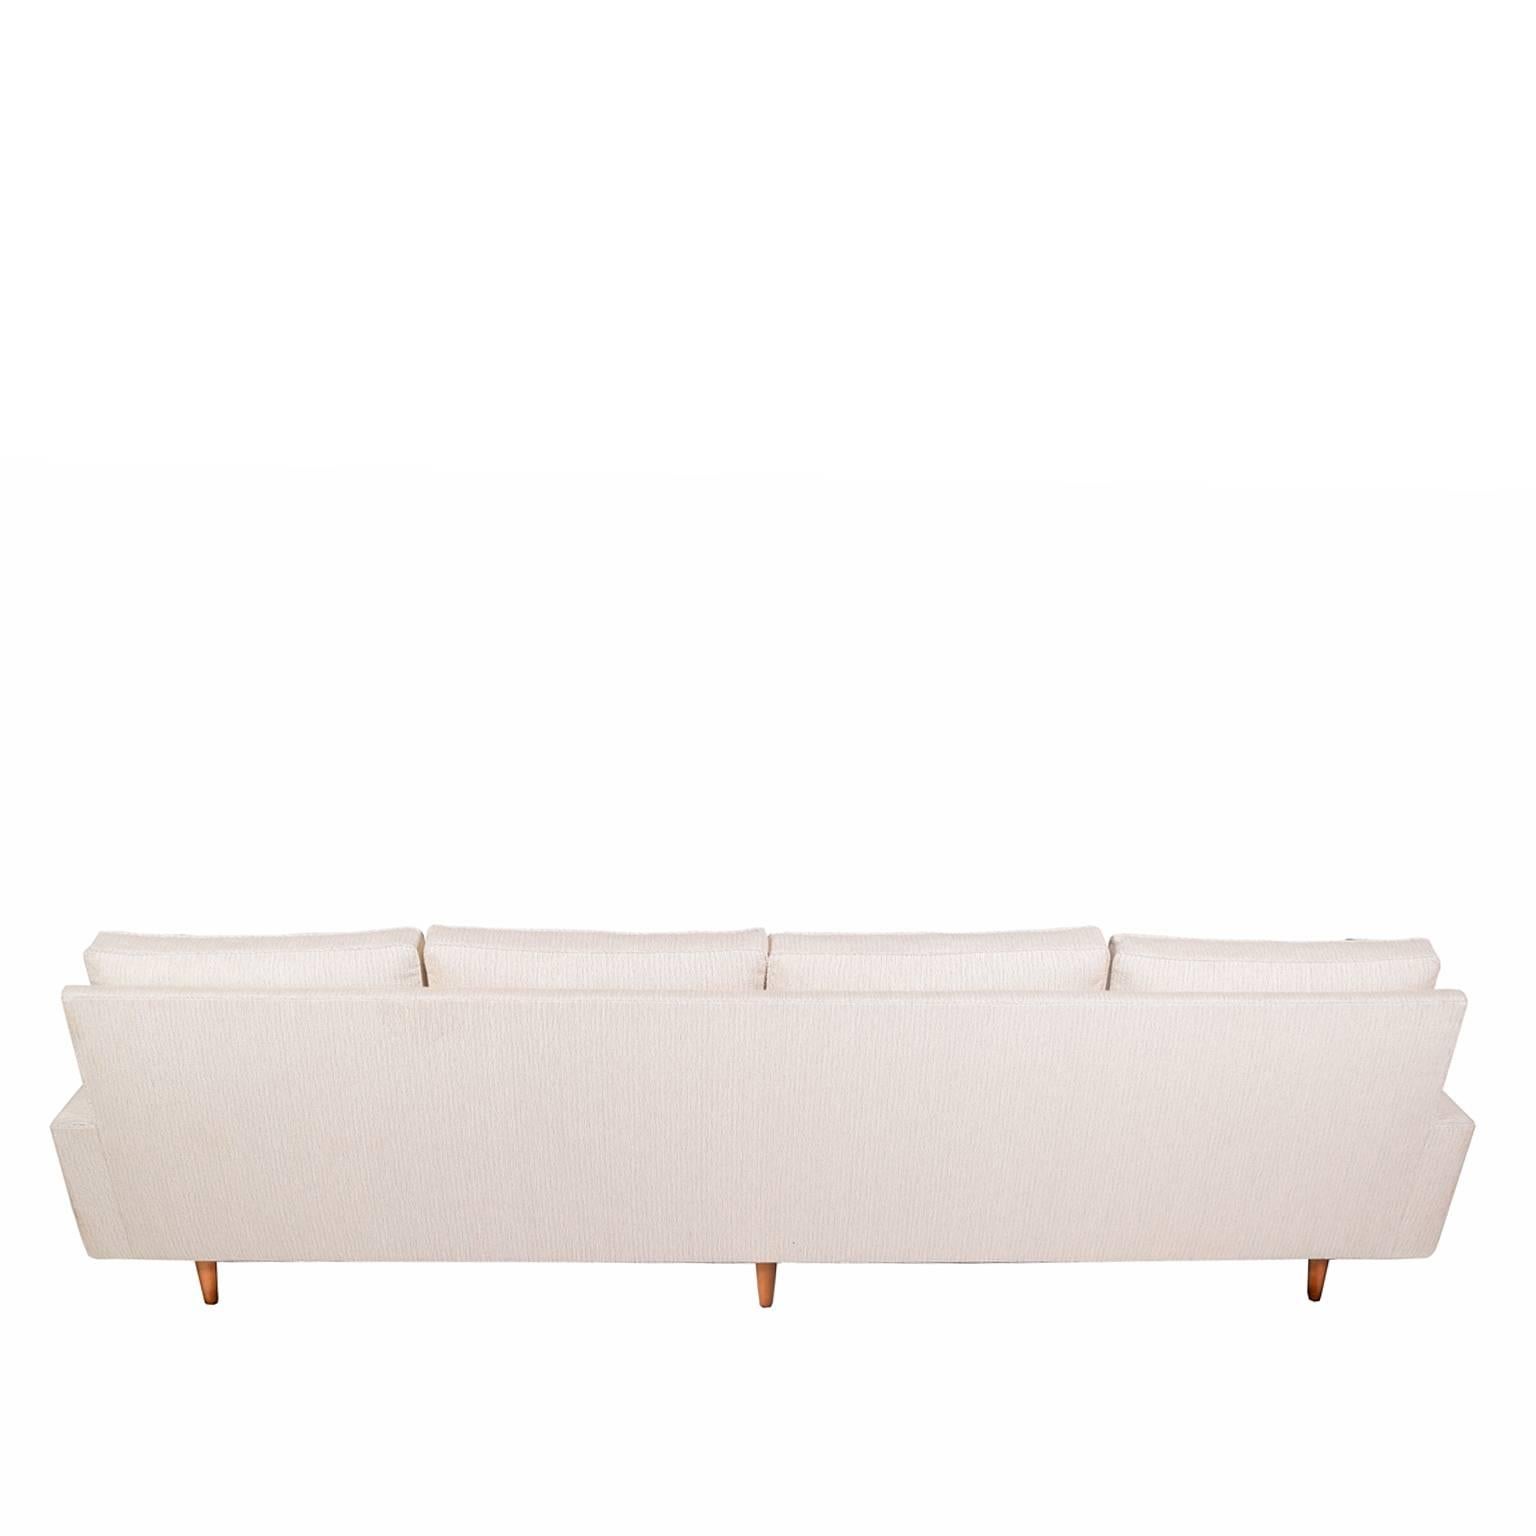 American Rare Four-Seat Florence Knoll Sofa #26